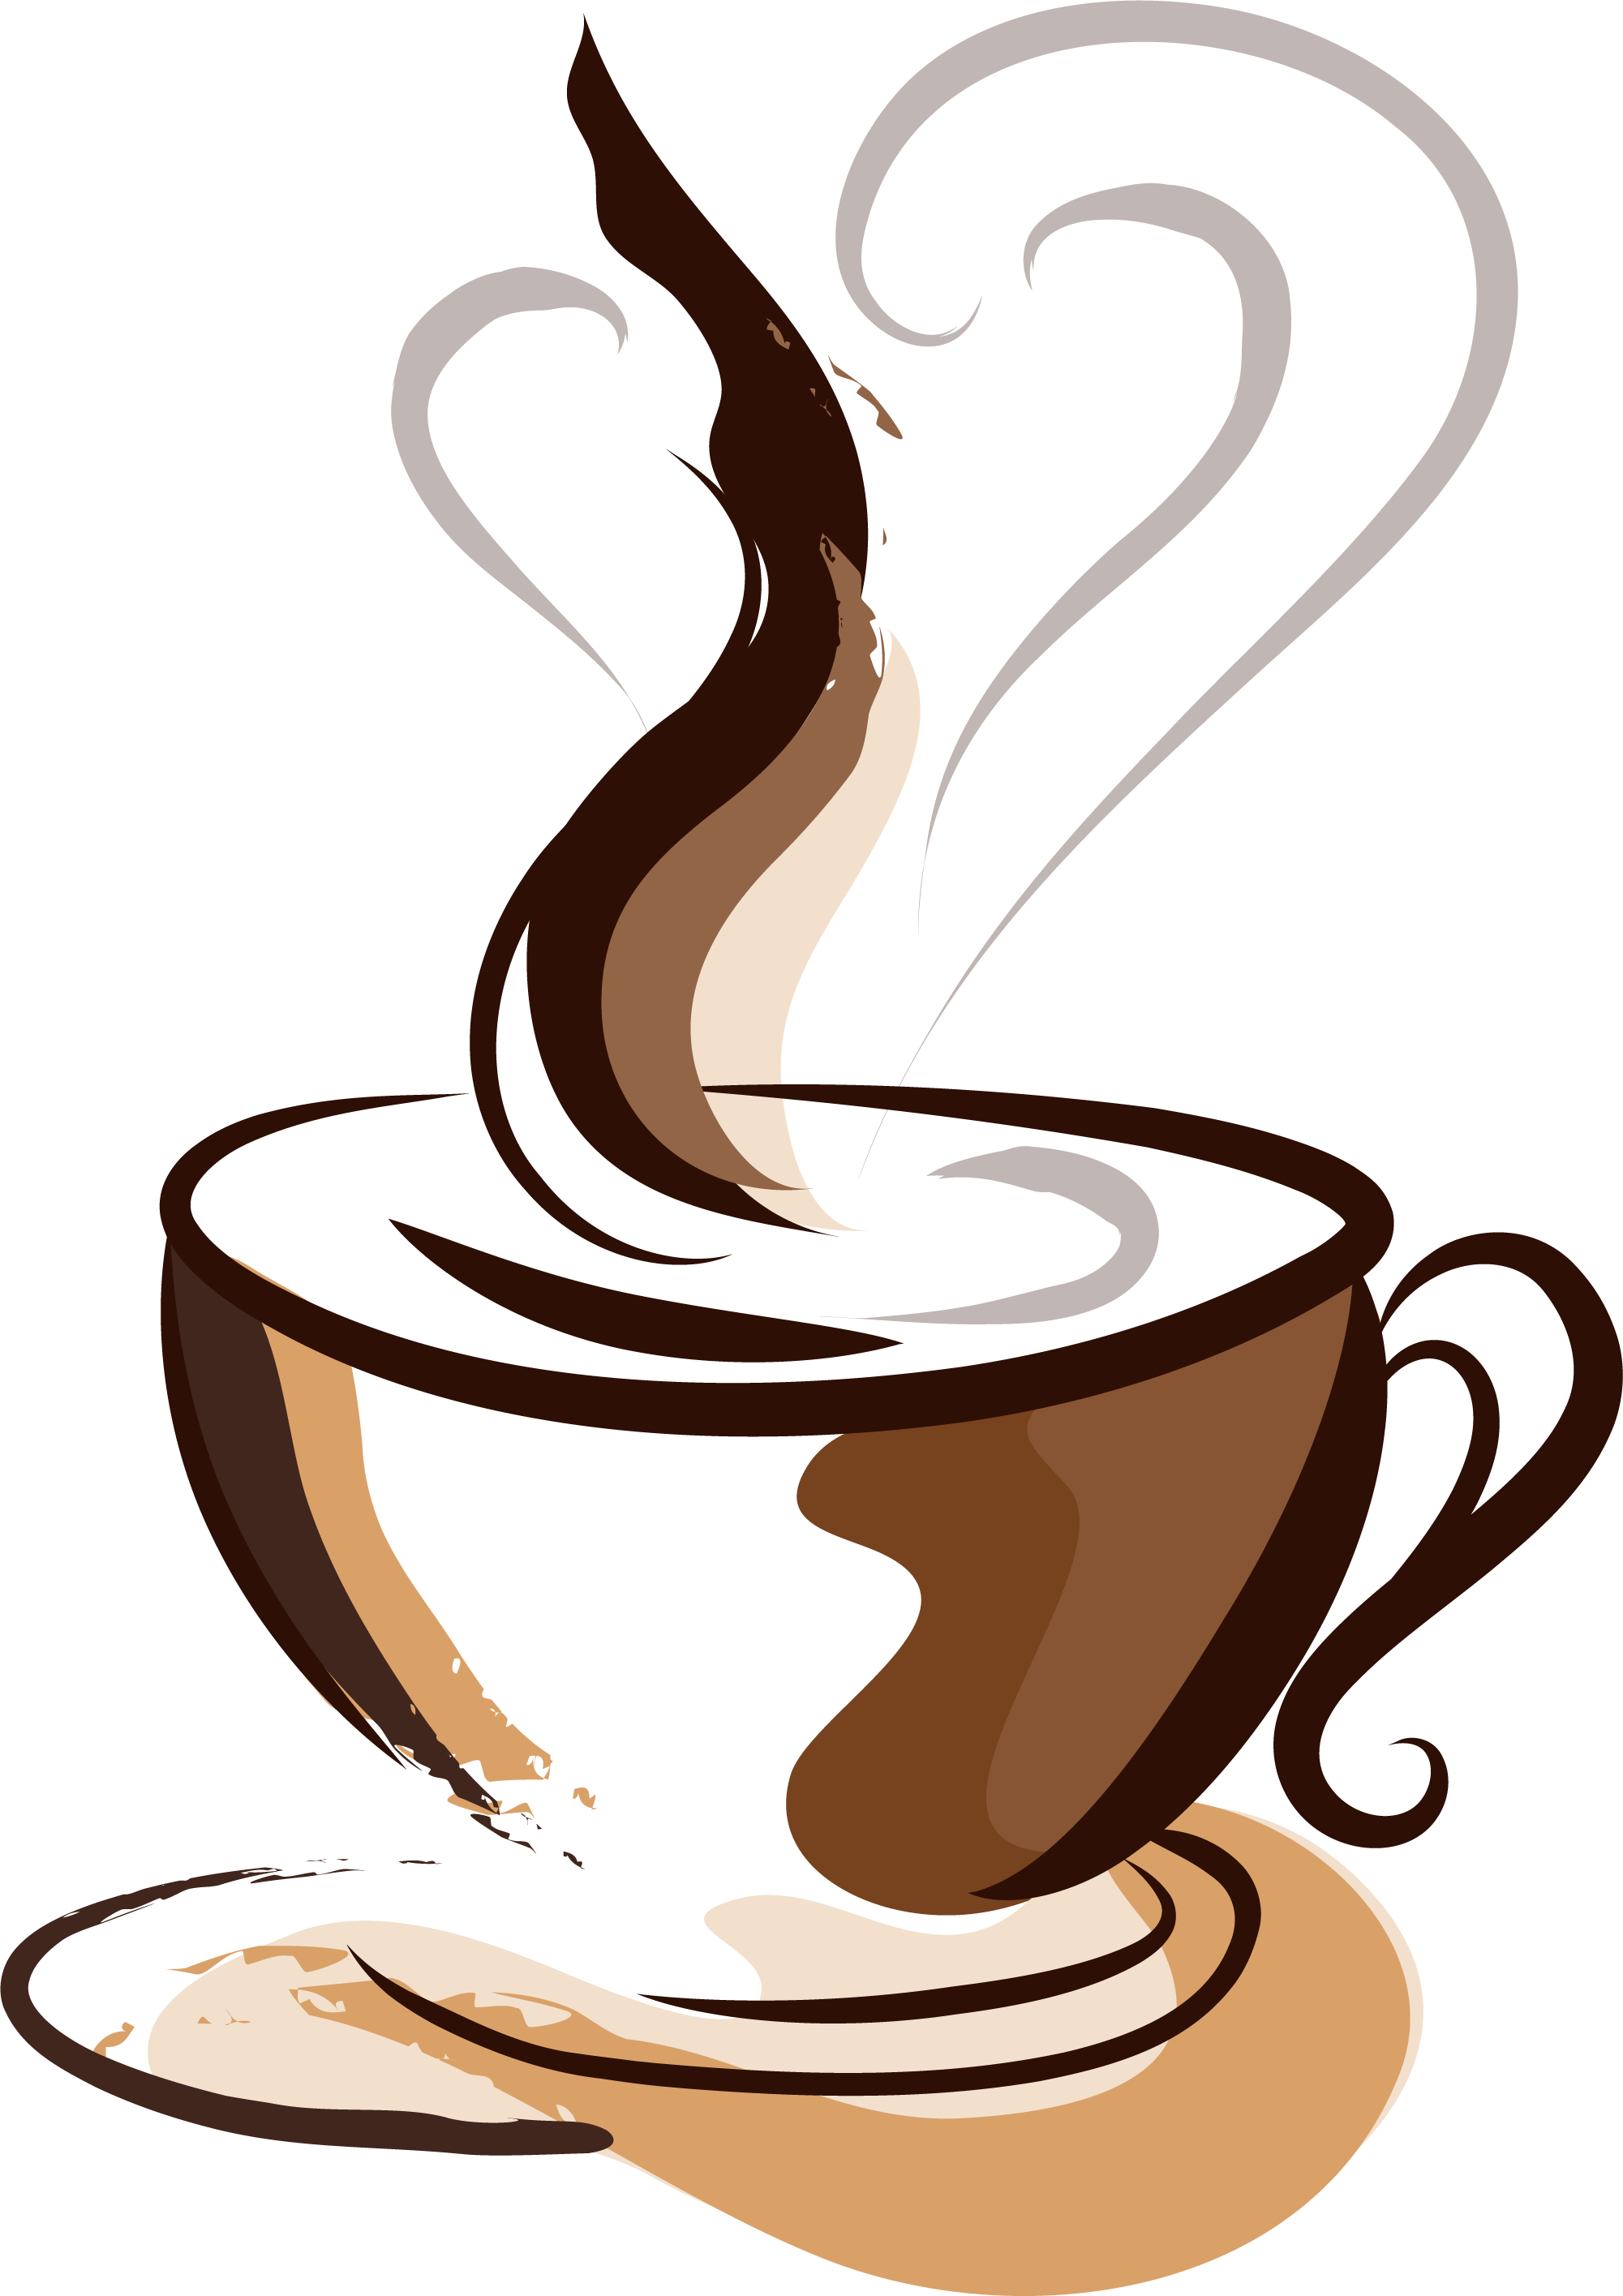 coffee illustration free download